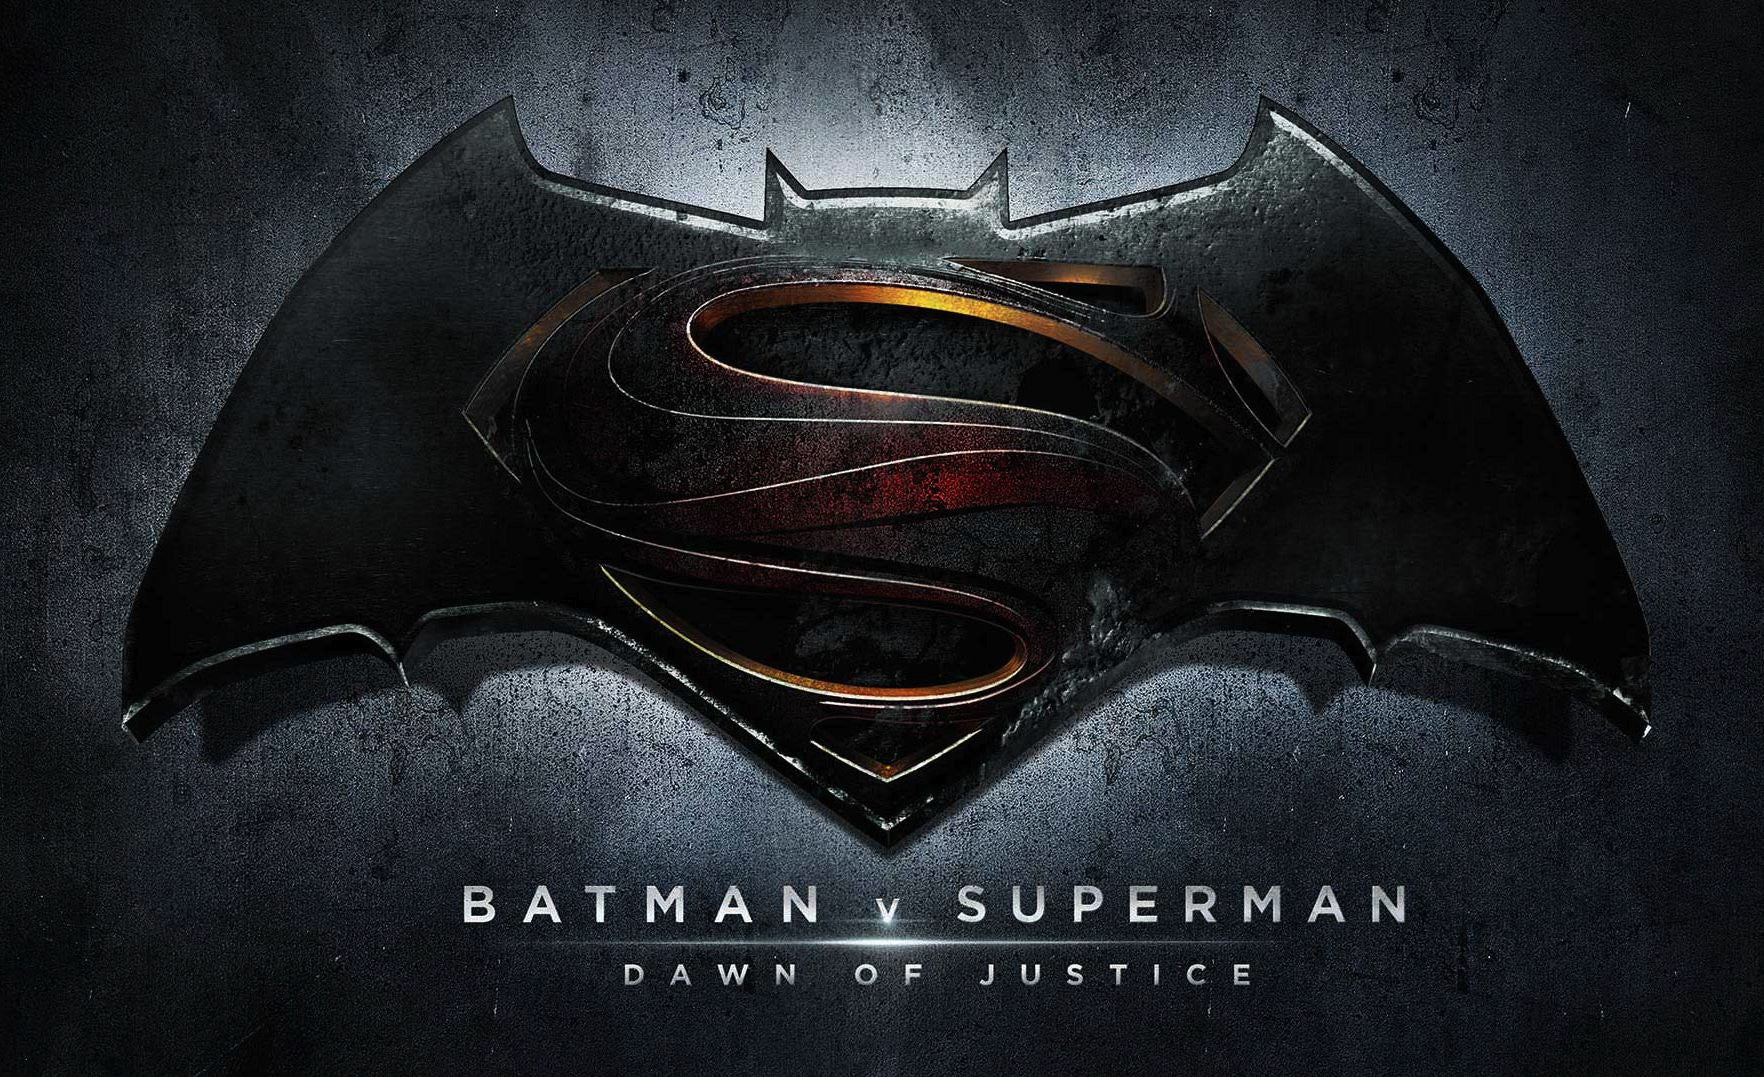 Spoiler-free Movie Review - Batman v Superman: Dawn of Justice